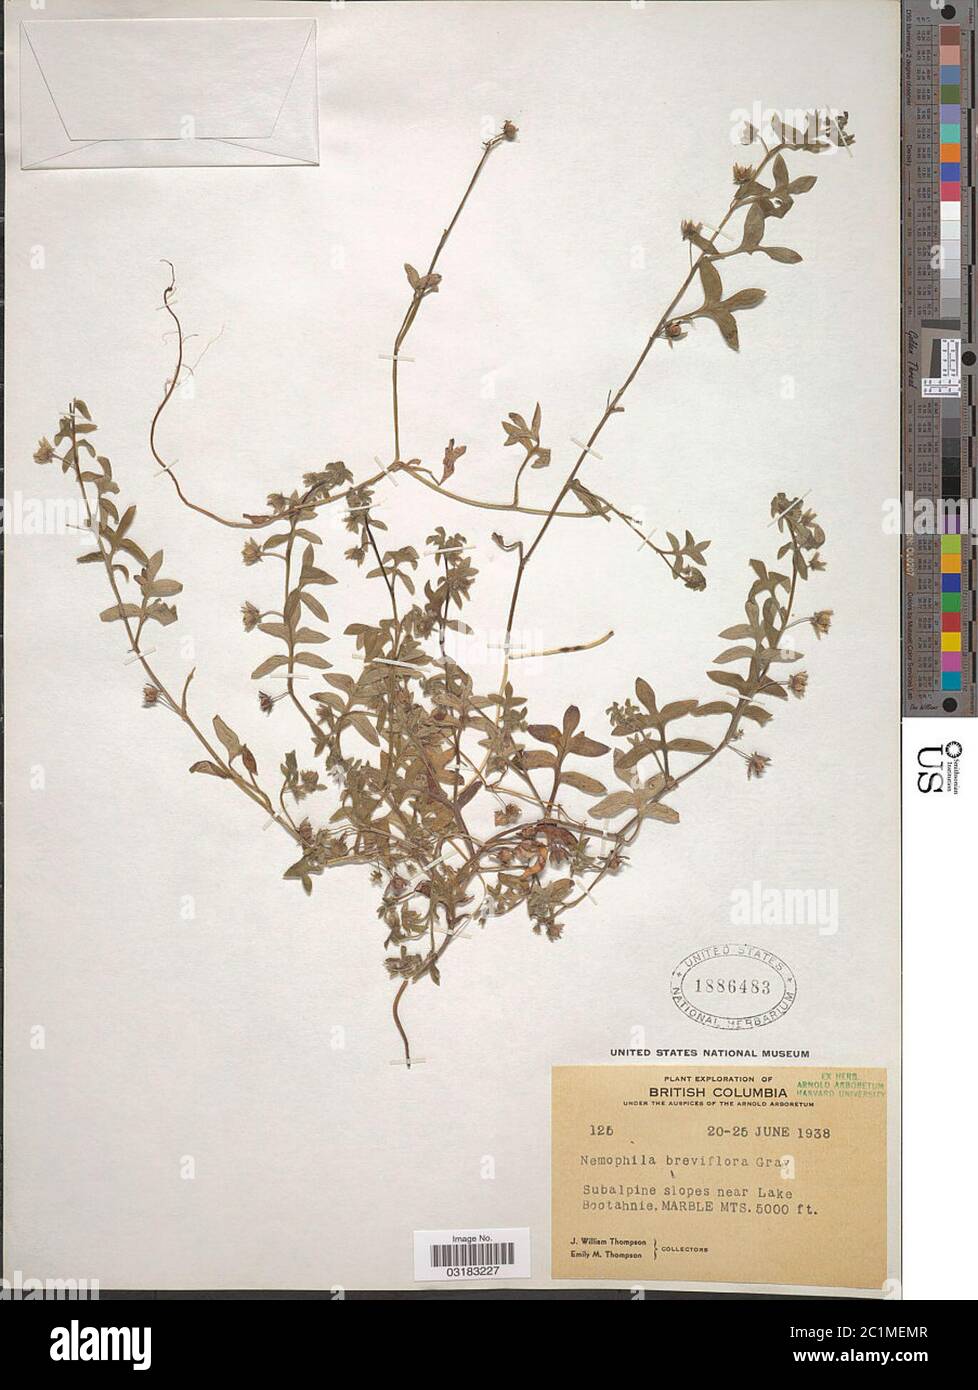 Nemophila breviflora A Gray Nemophila breviflora A Gray. Stock Photo